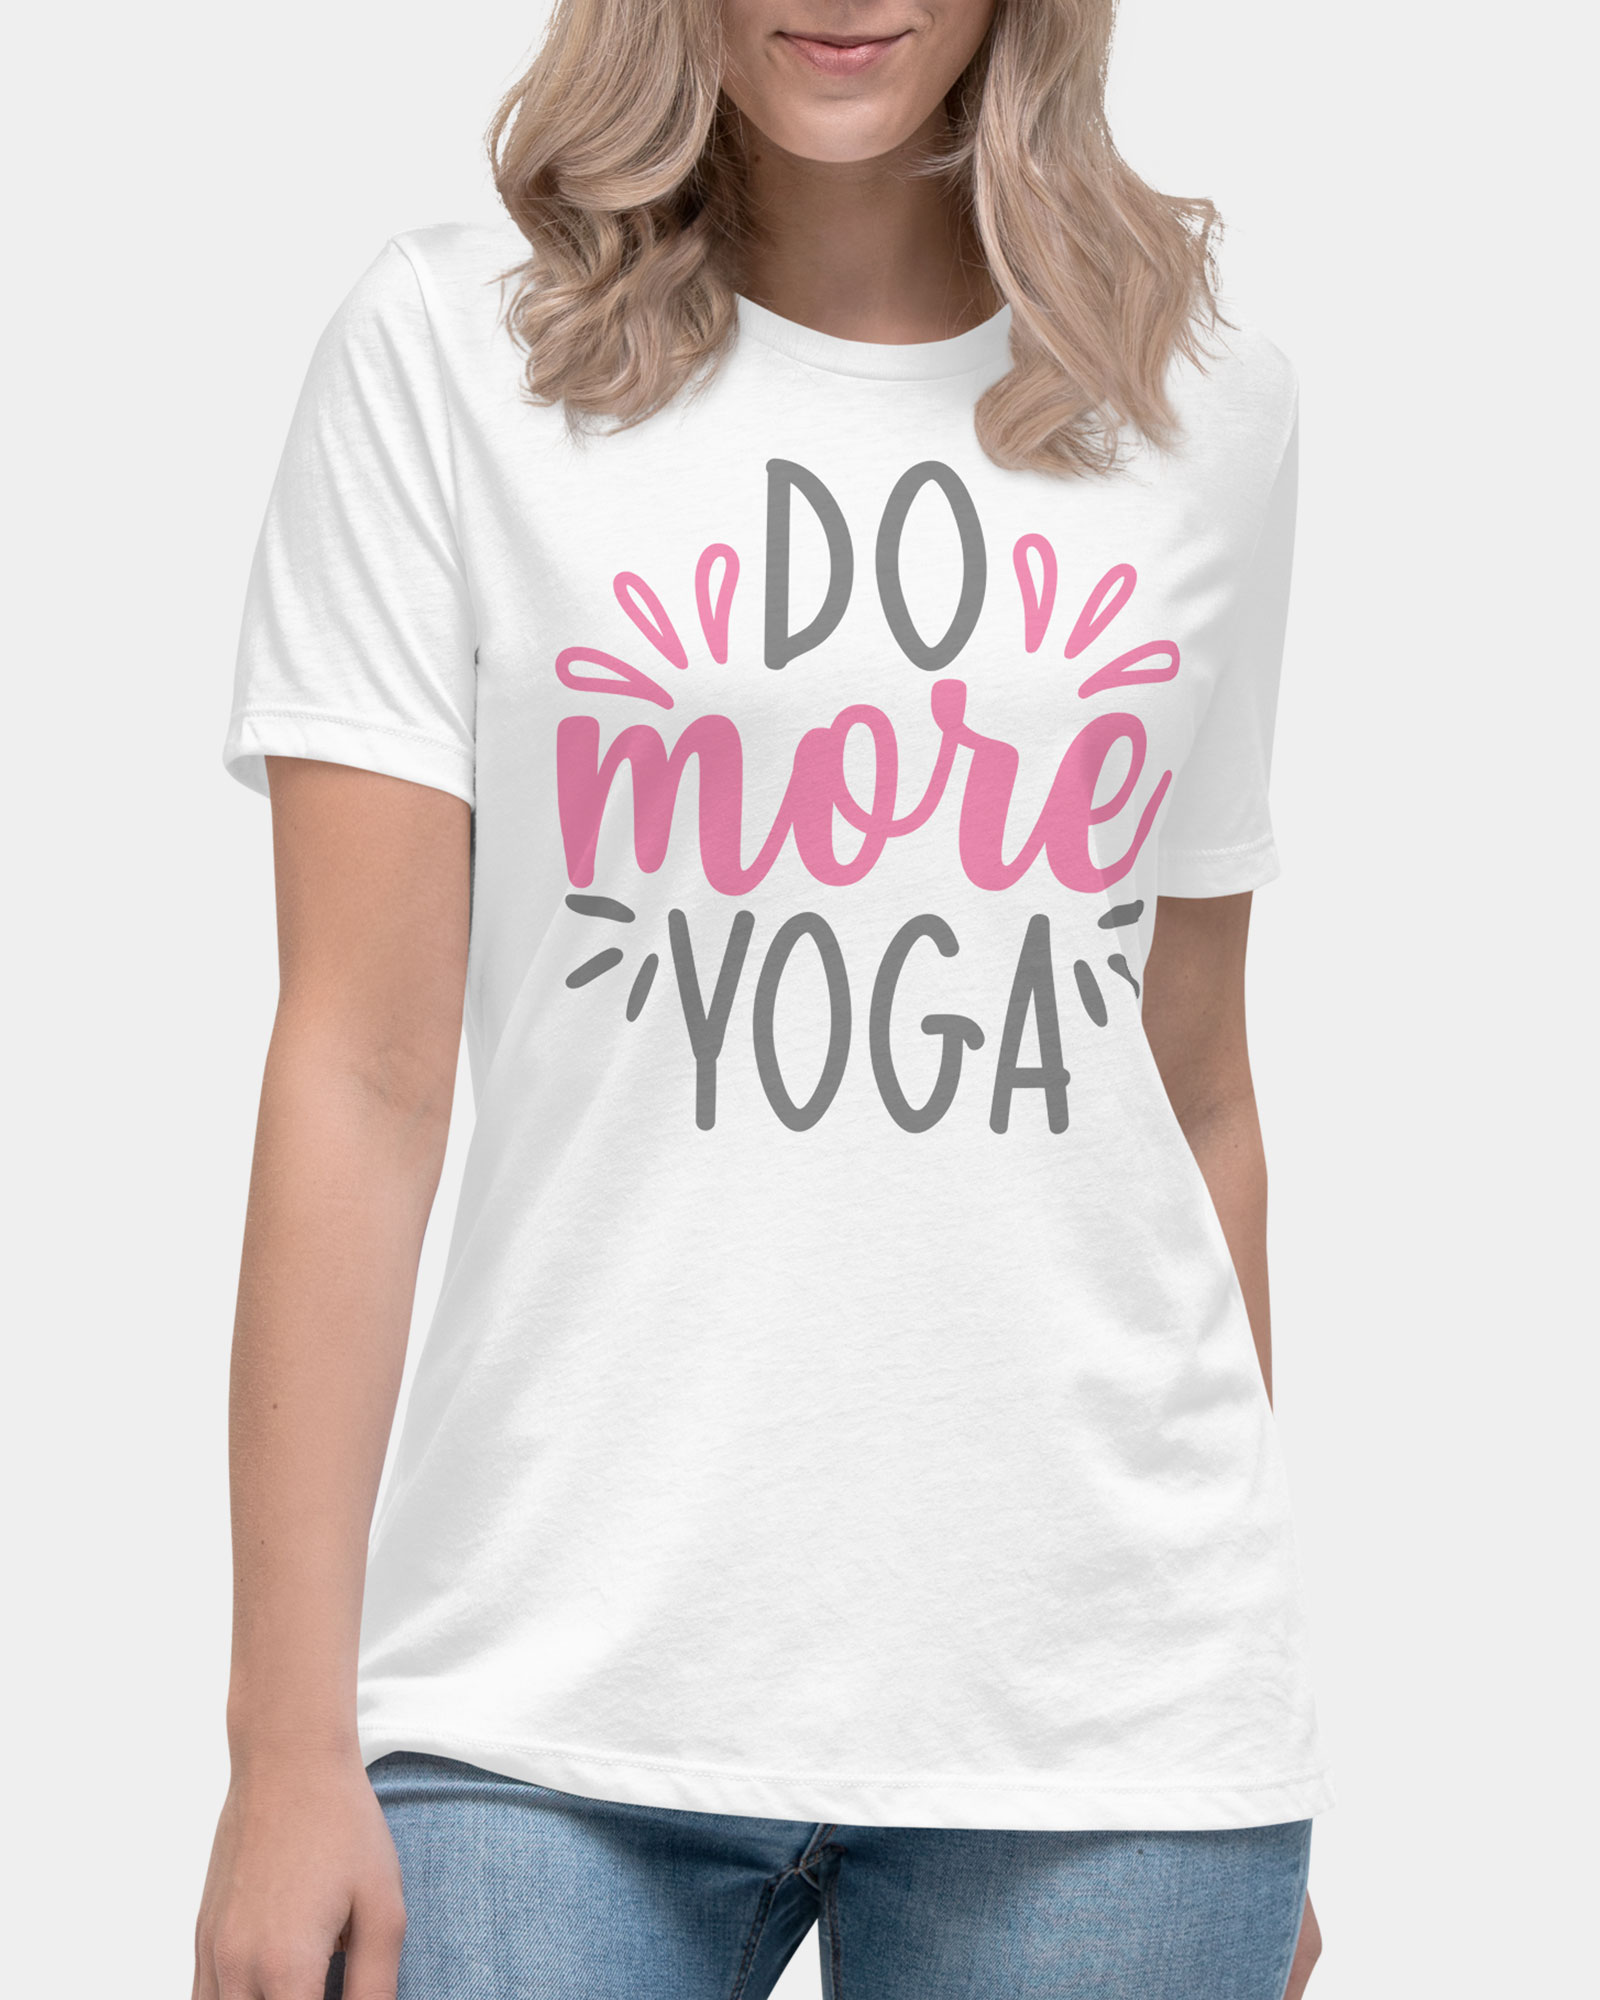 Do more yoga tshirt for women